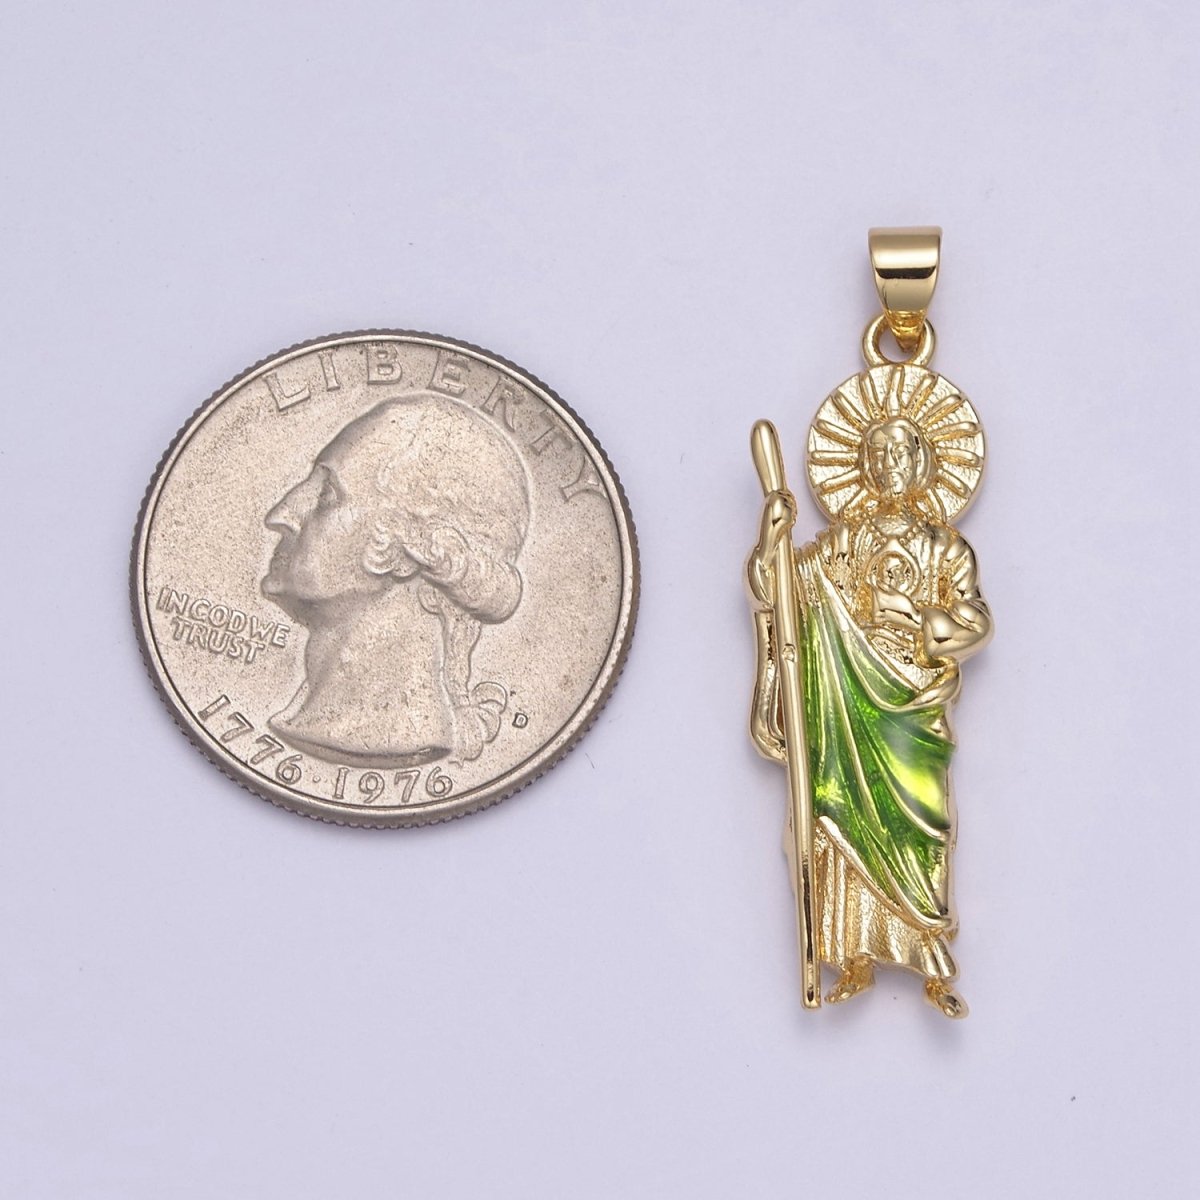 Gold St Jude Pendant San Judas Tadeo Medalla Charm medallion Patron Saint of Hopeless Cause Rosary Necklace Jewelry Supply N-1403 N-549 - DLUXCA